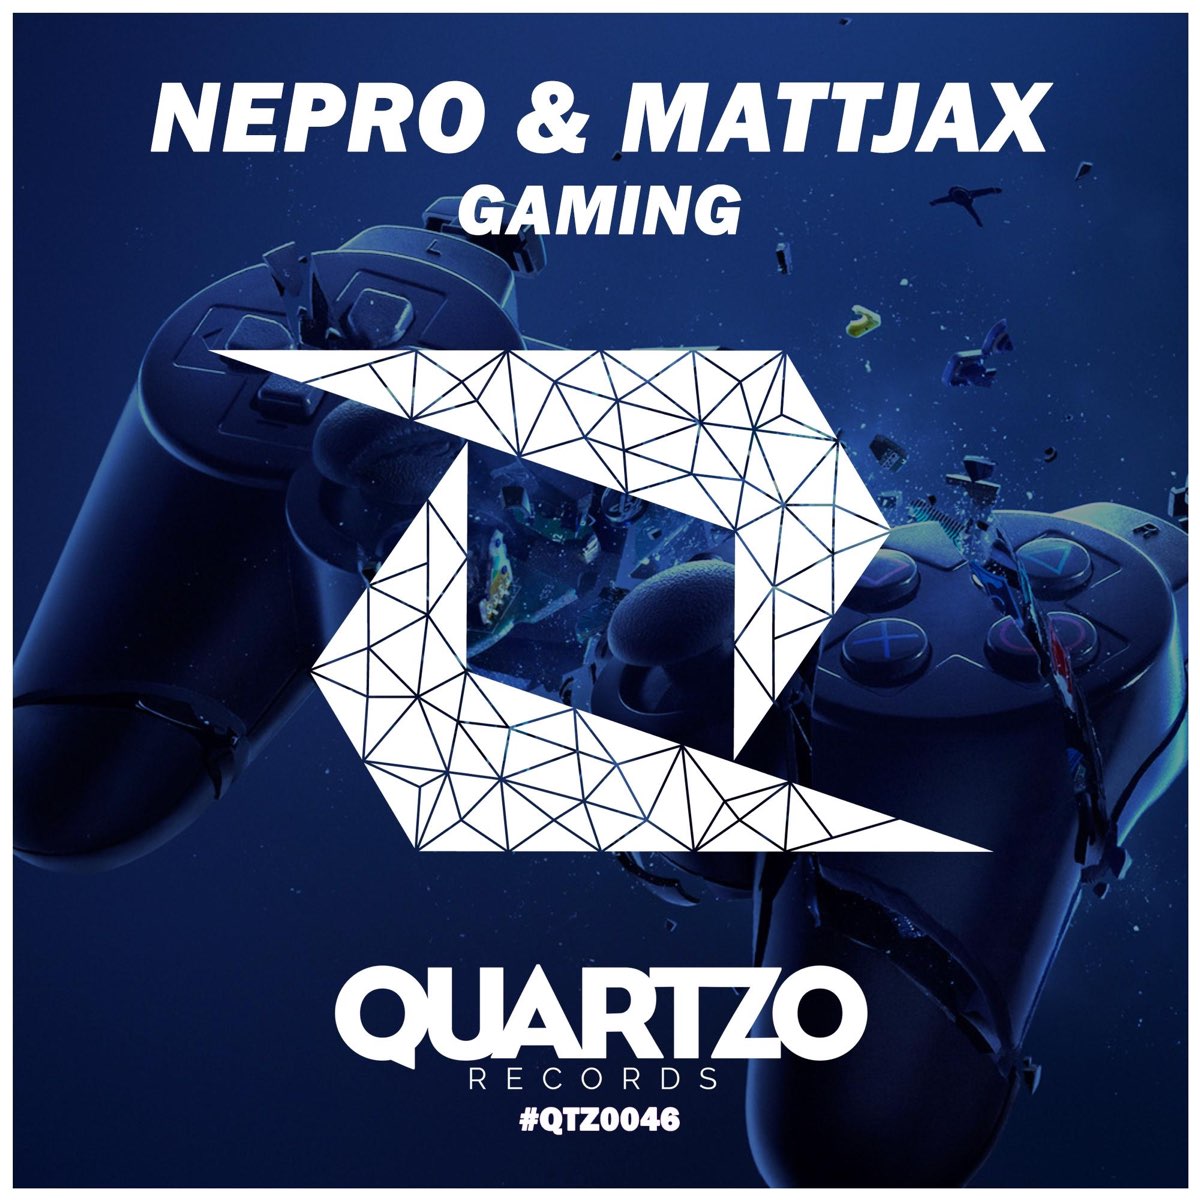 Gaming - Single - Album by Mattjax & Nepro - Apple Music